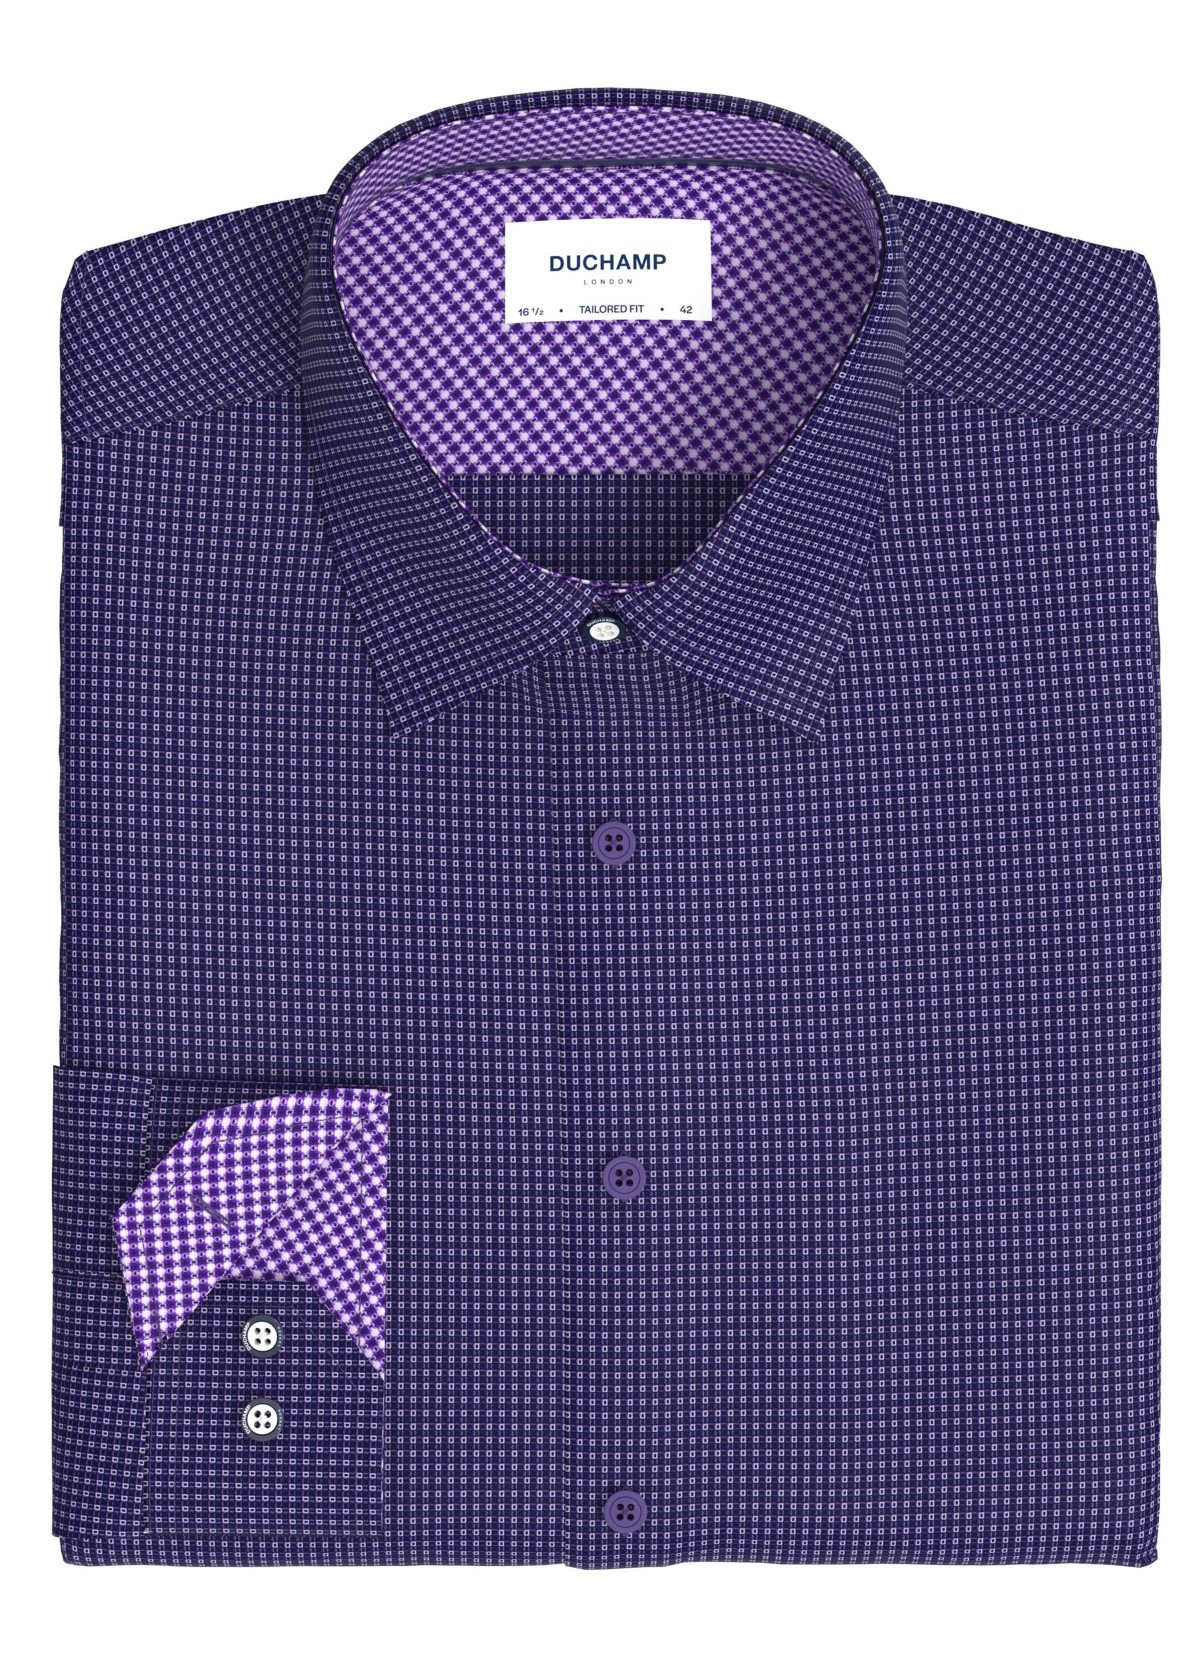 Men's Neat Dress Shirt - Purple